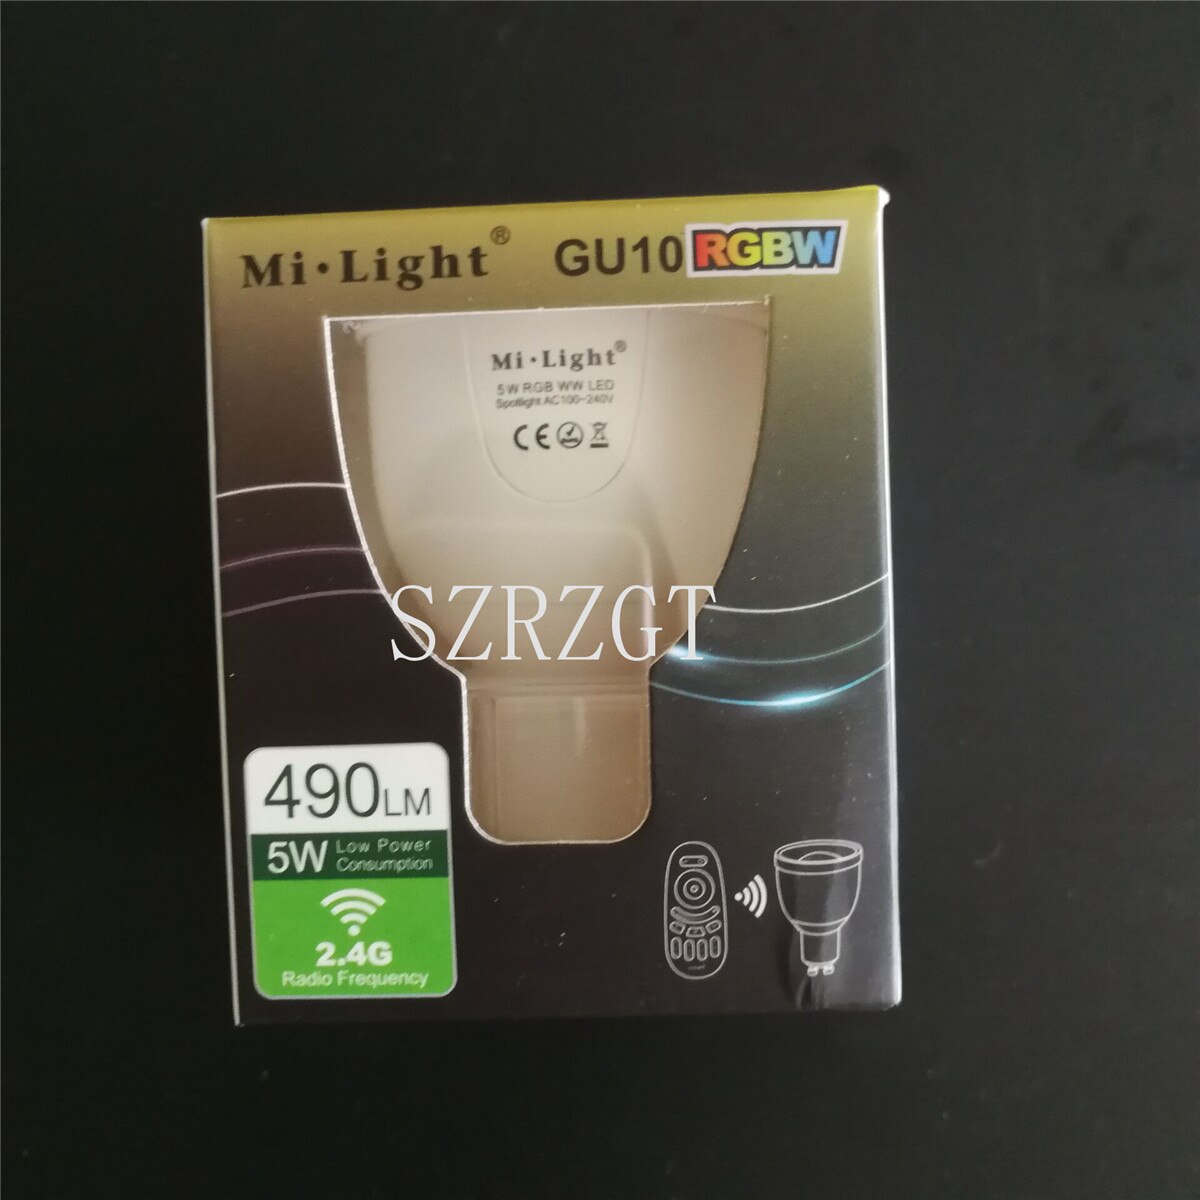 Mi. licht FUT018 GU10 dimbare 2.4G led spot lamp 100-240V 5W RGBW LED Lamp controle door iphone Ipad Android